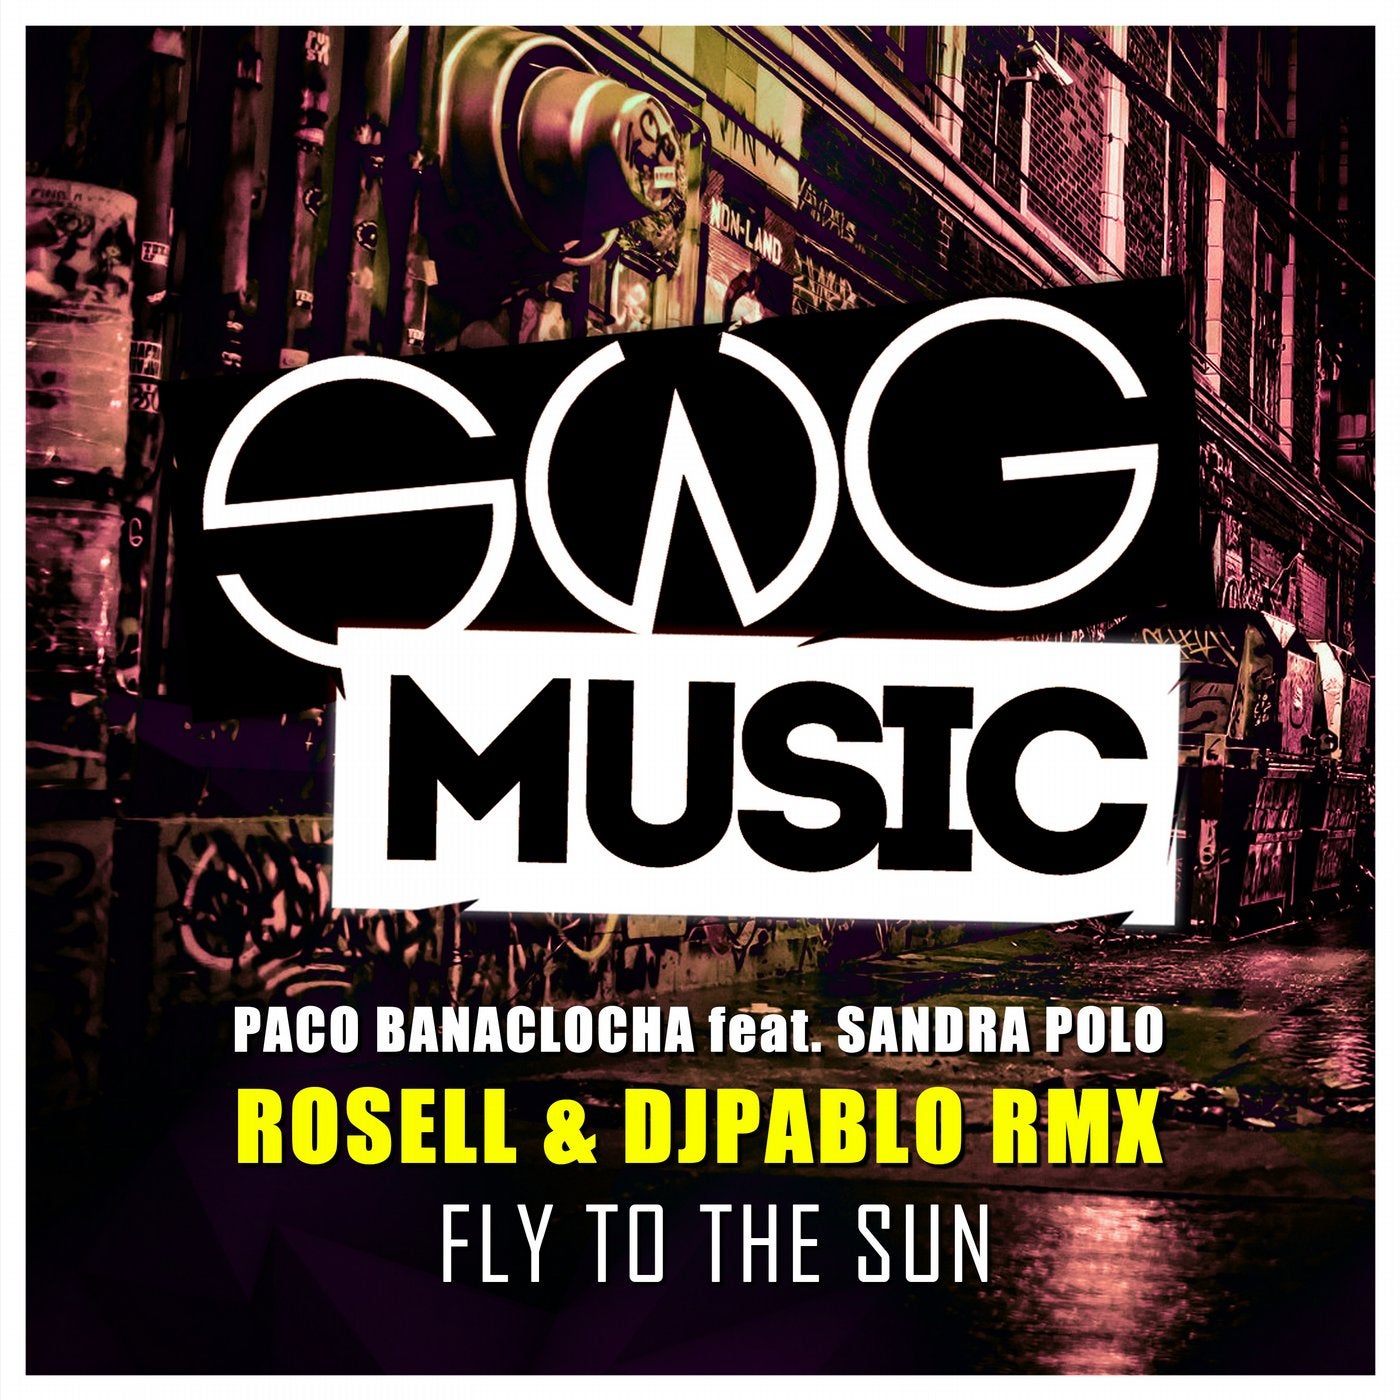 Fly To The Sun (Rosell & DjPablo Rmx)